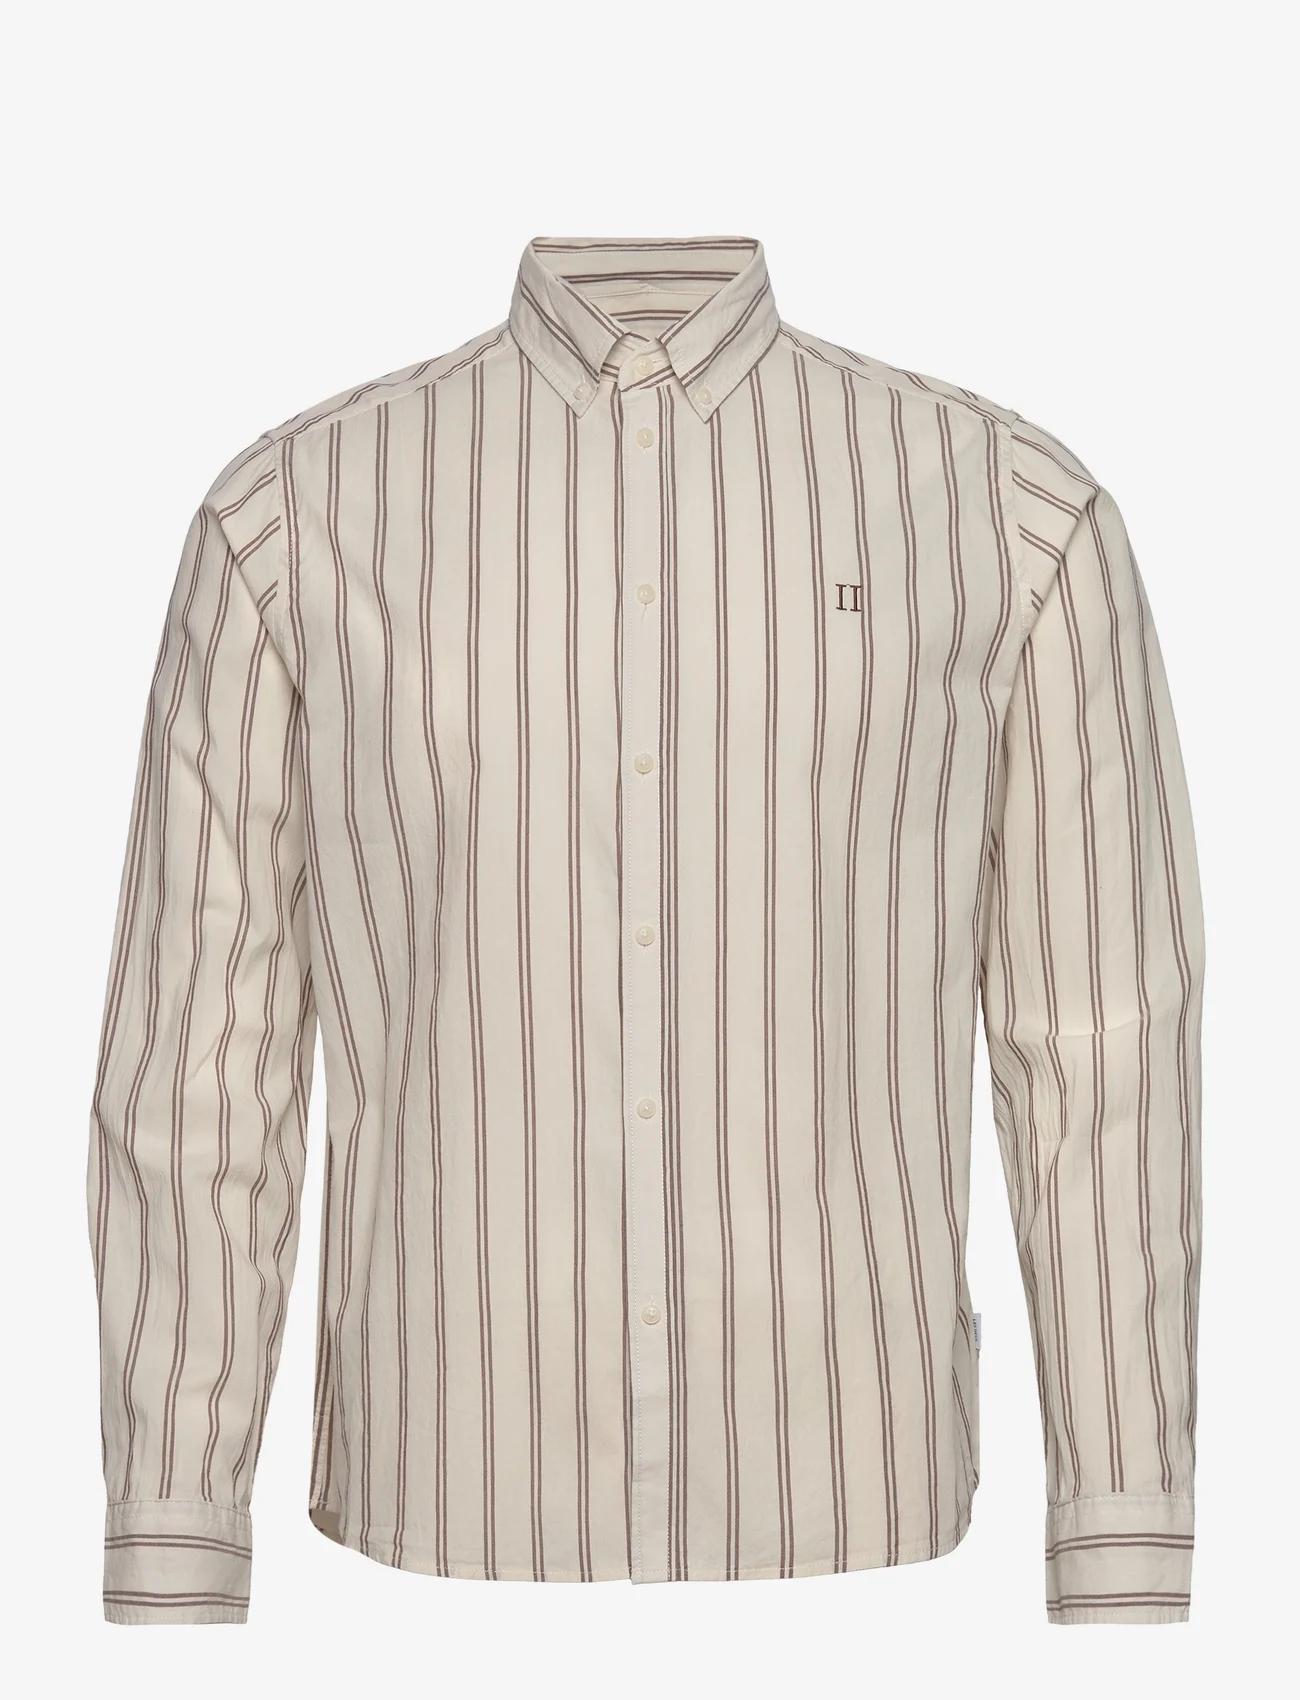 Les Deux - Kristian Stripe Shirt - oxford-skjortor - ivory/warm brown - 0